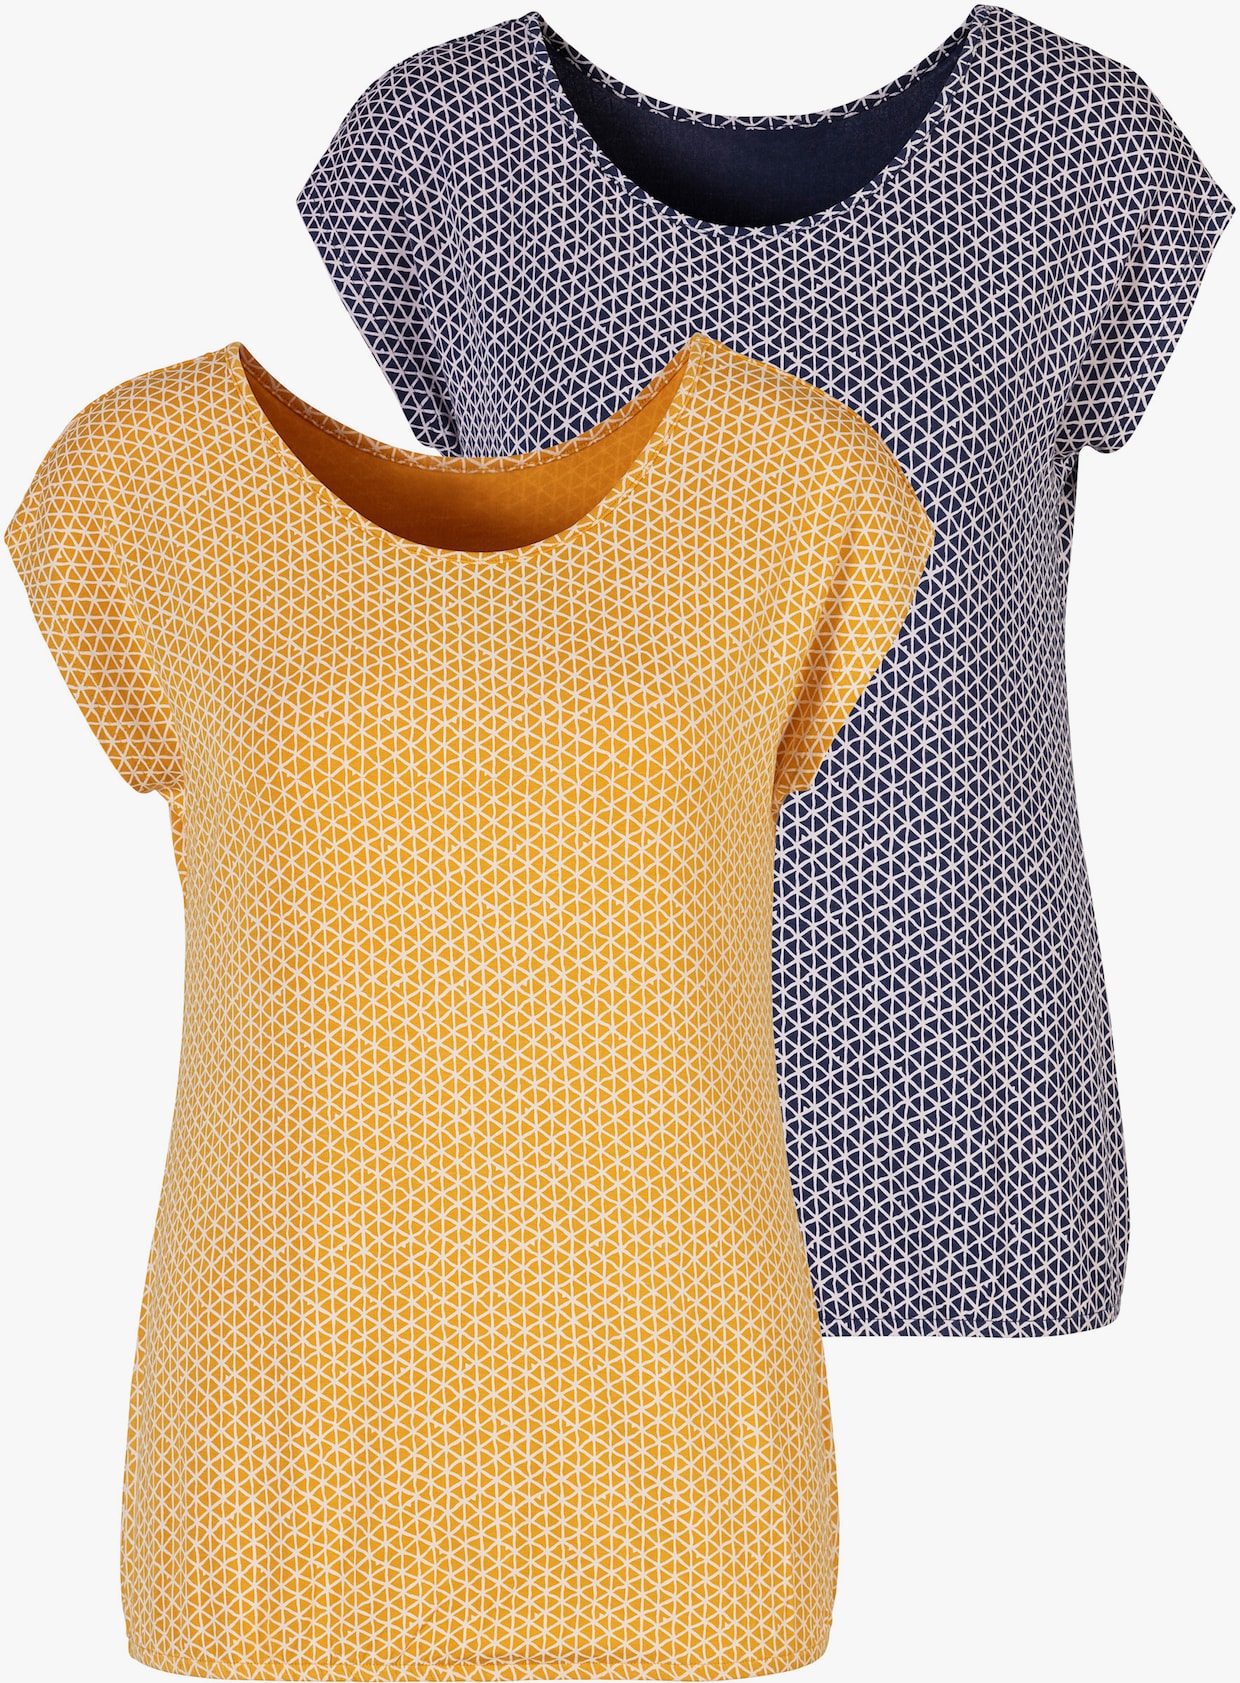 Vivance T-shirt - geel, blauw